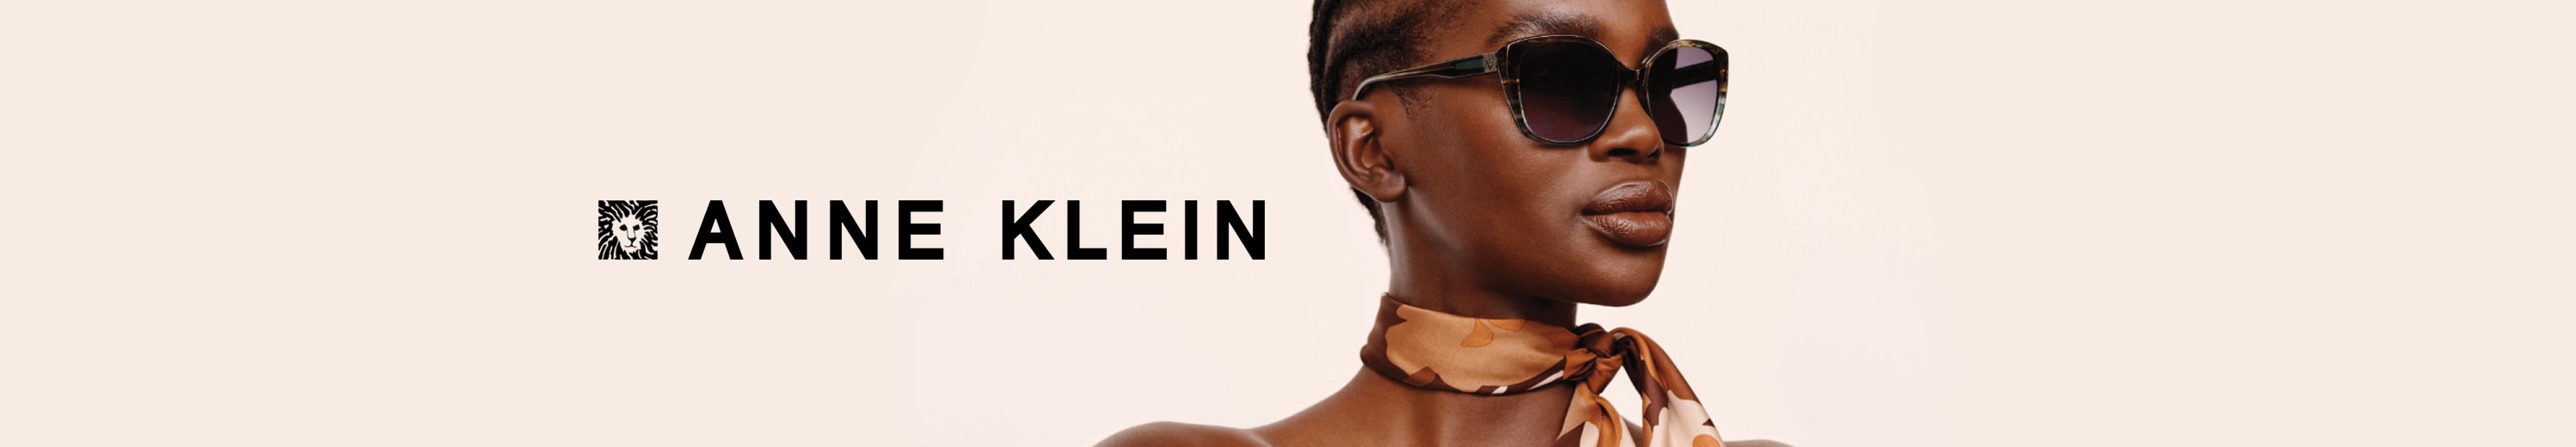 Anne Klein Glasses and Eyewear